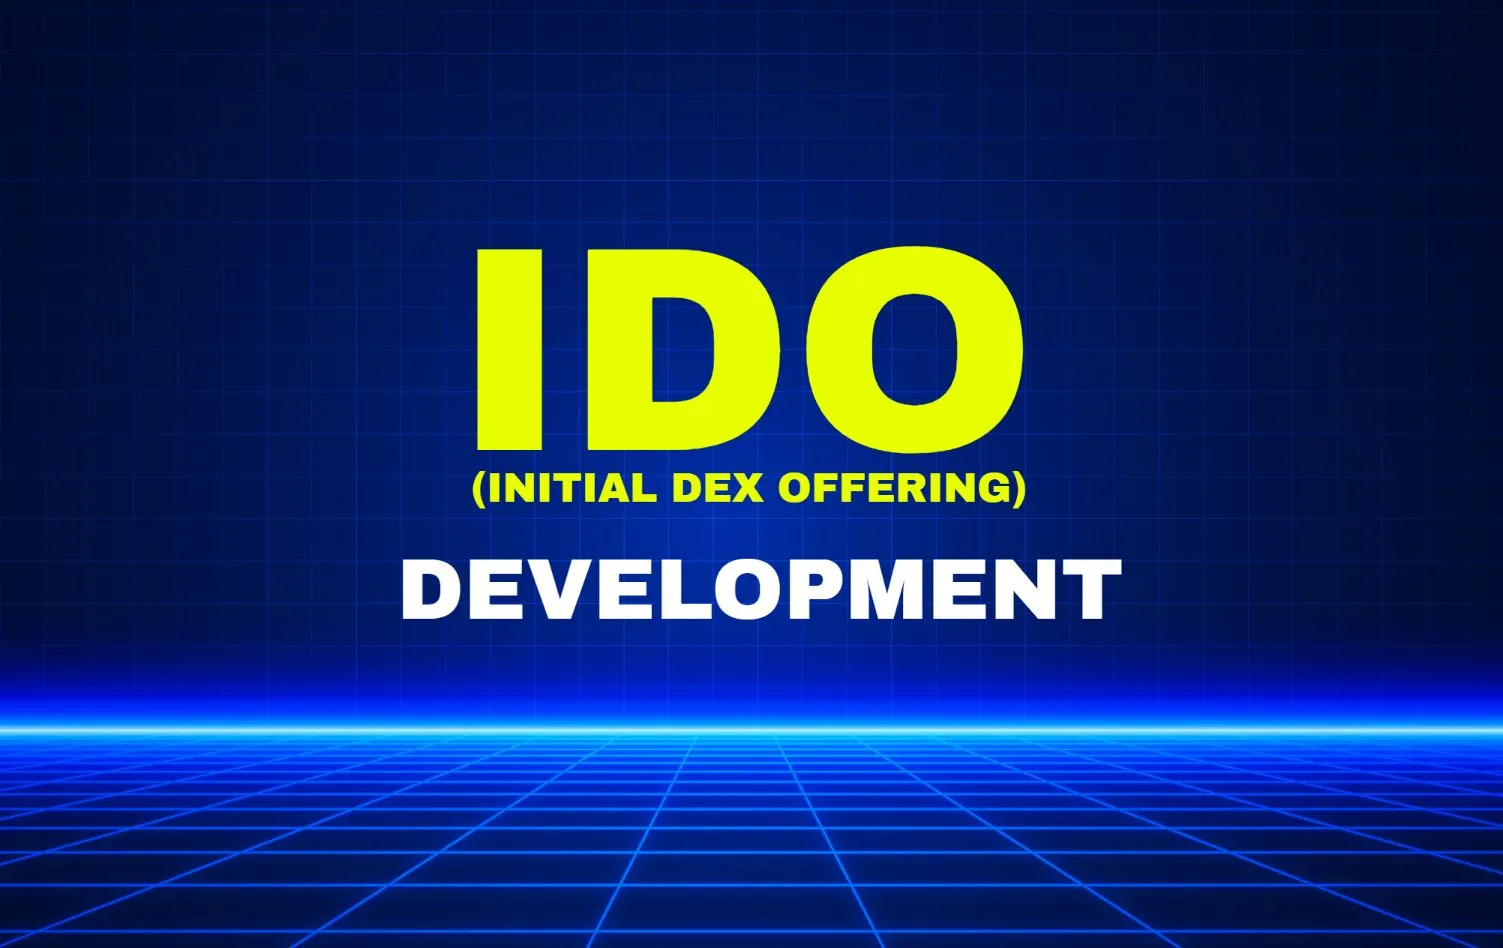 IDO Development Company - Initial Dex Offering